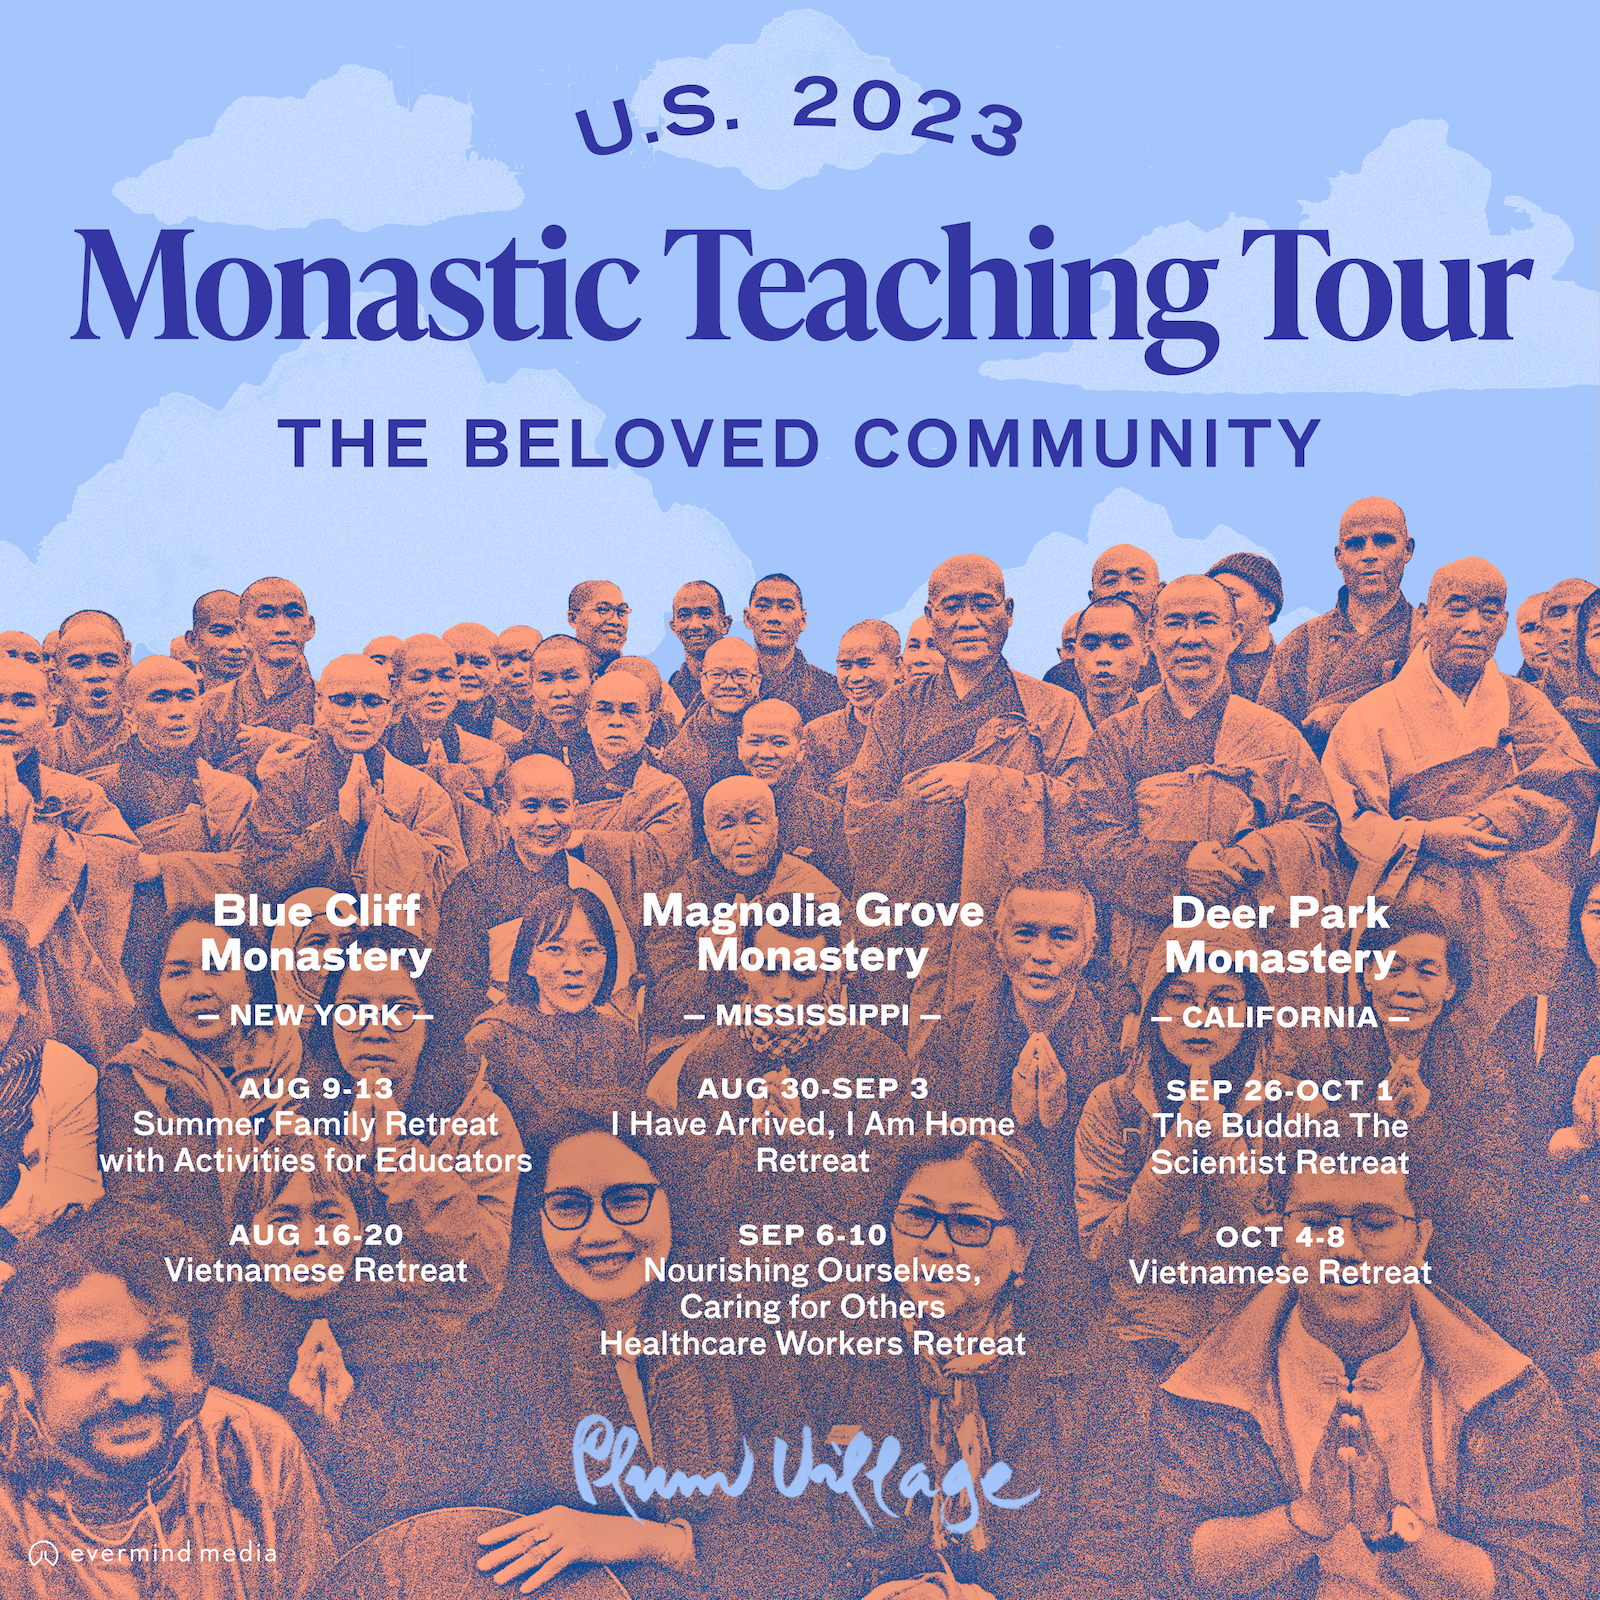 U.S. 2023 Monastic Teaching Tour: the Beloved Community. At Blue Cliff Monastery, Magnolia Grove Monastery, and Deer Park Monastery